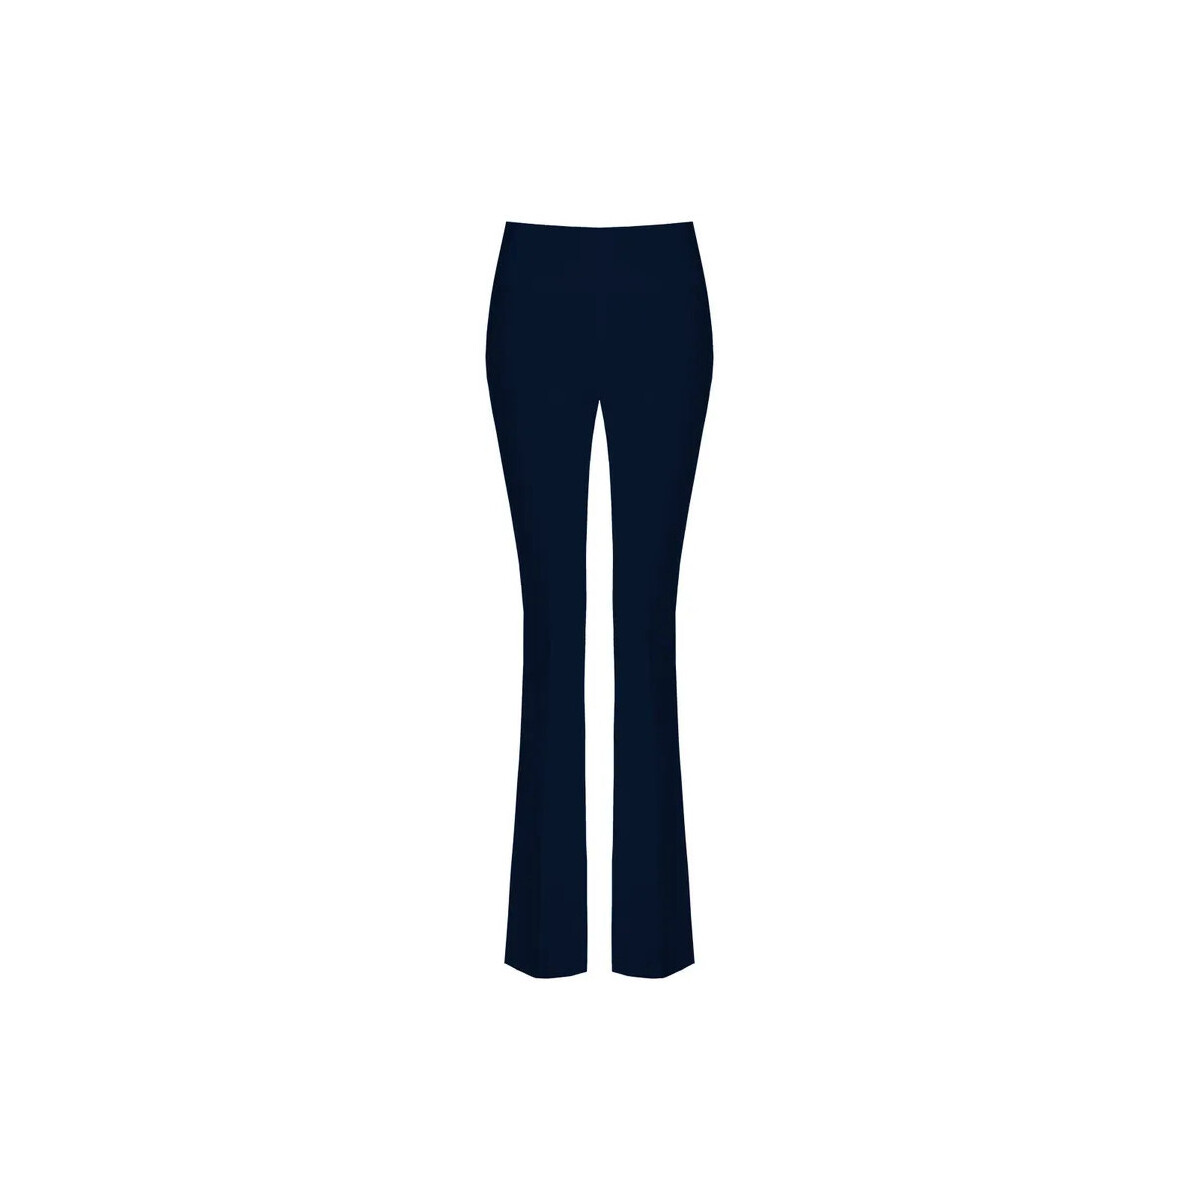 Textiel Dames Broeken / Pantalons Rinascimento CFC0117682003 Bleu